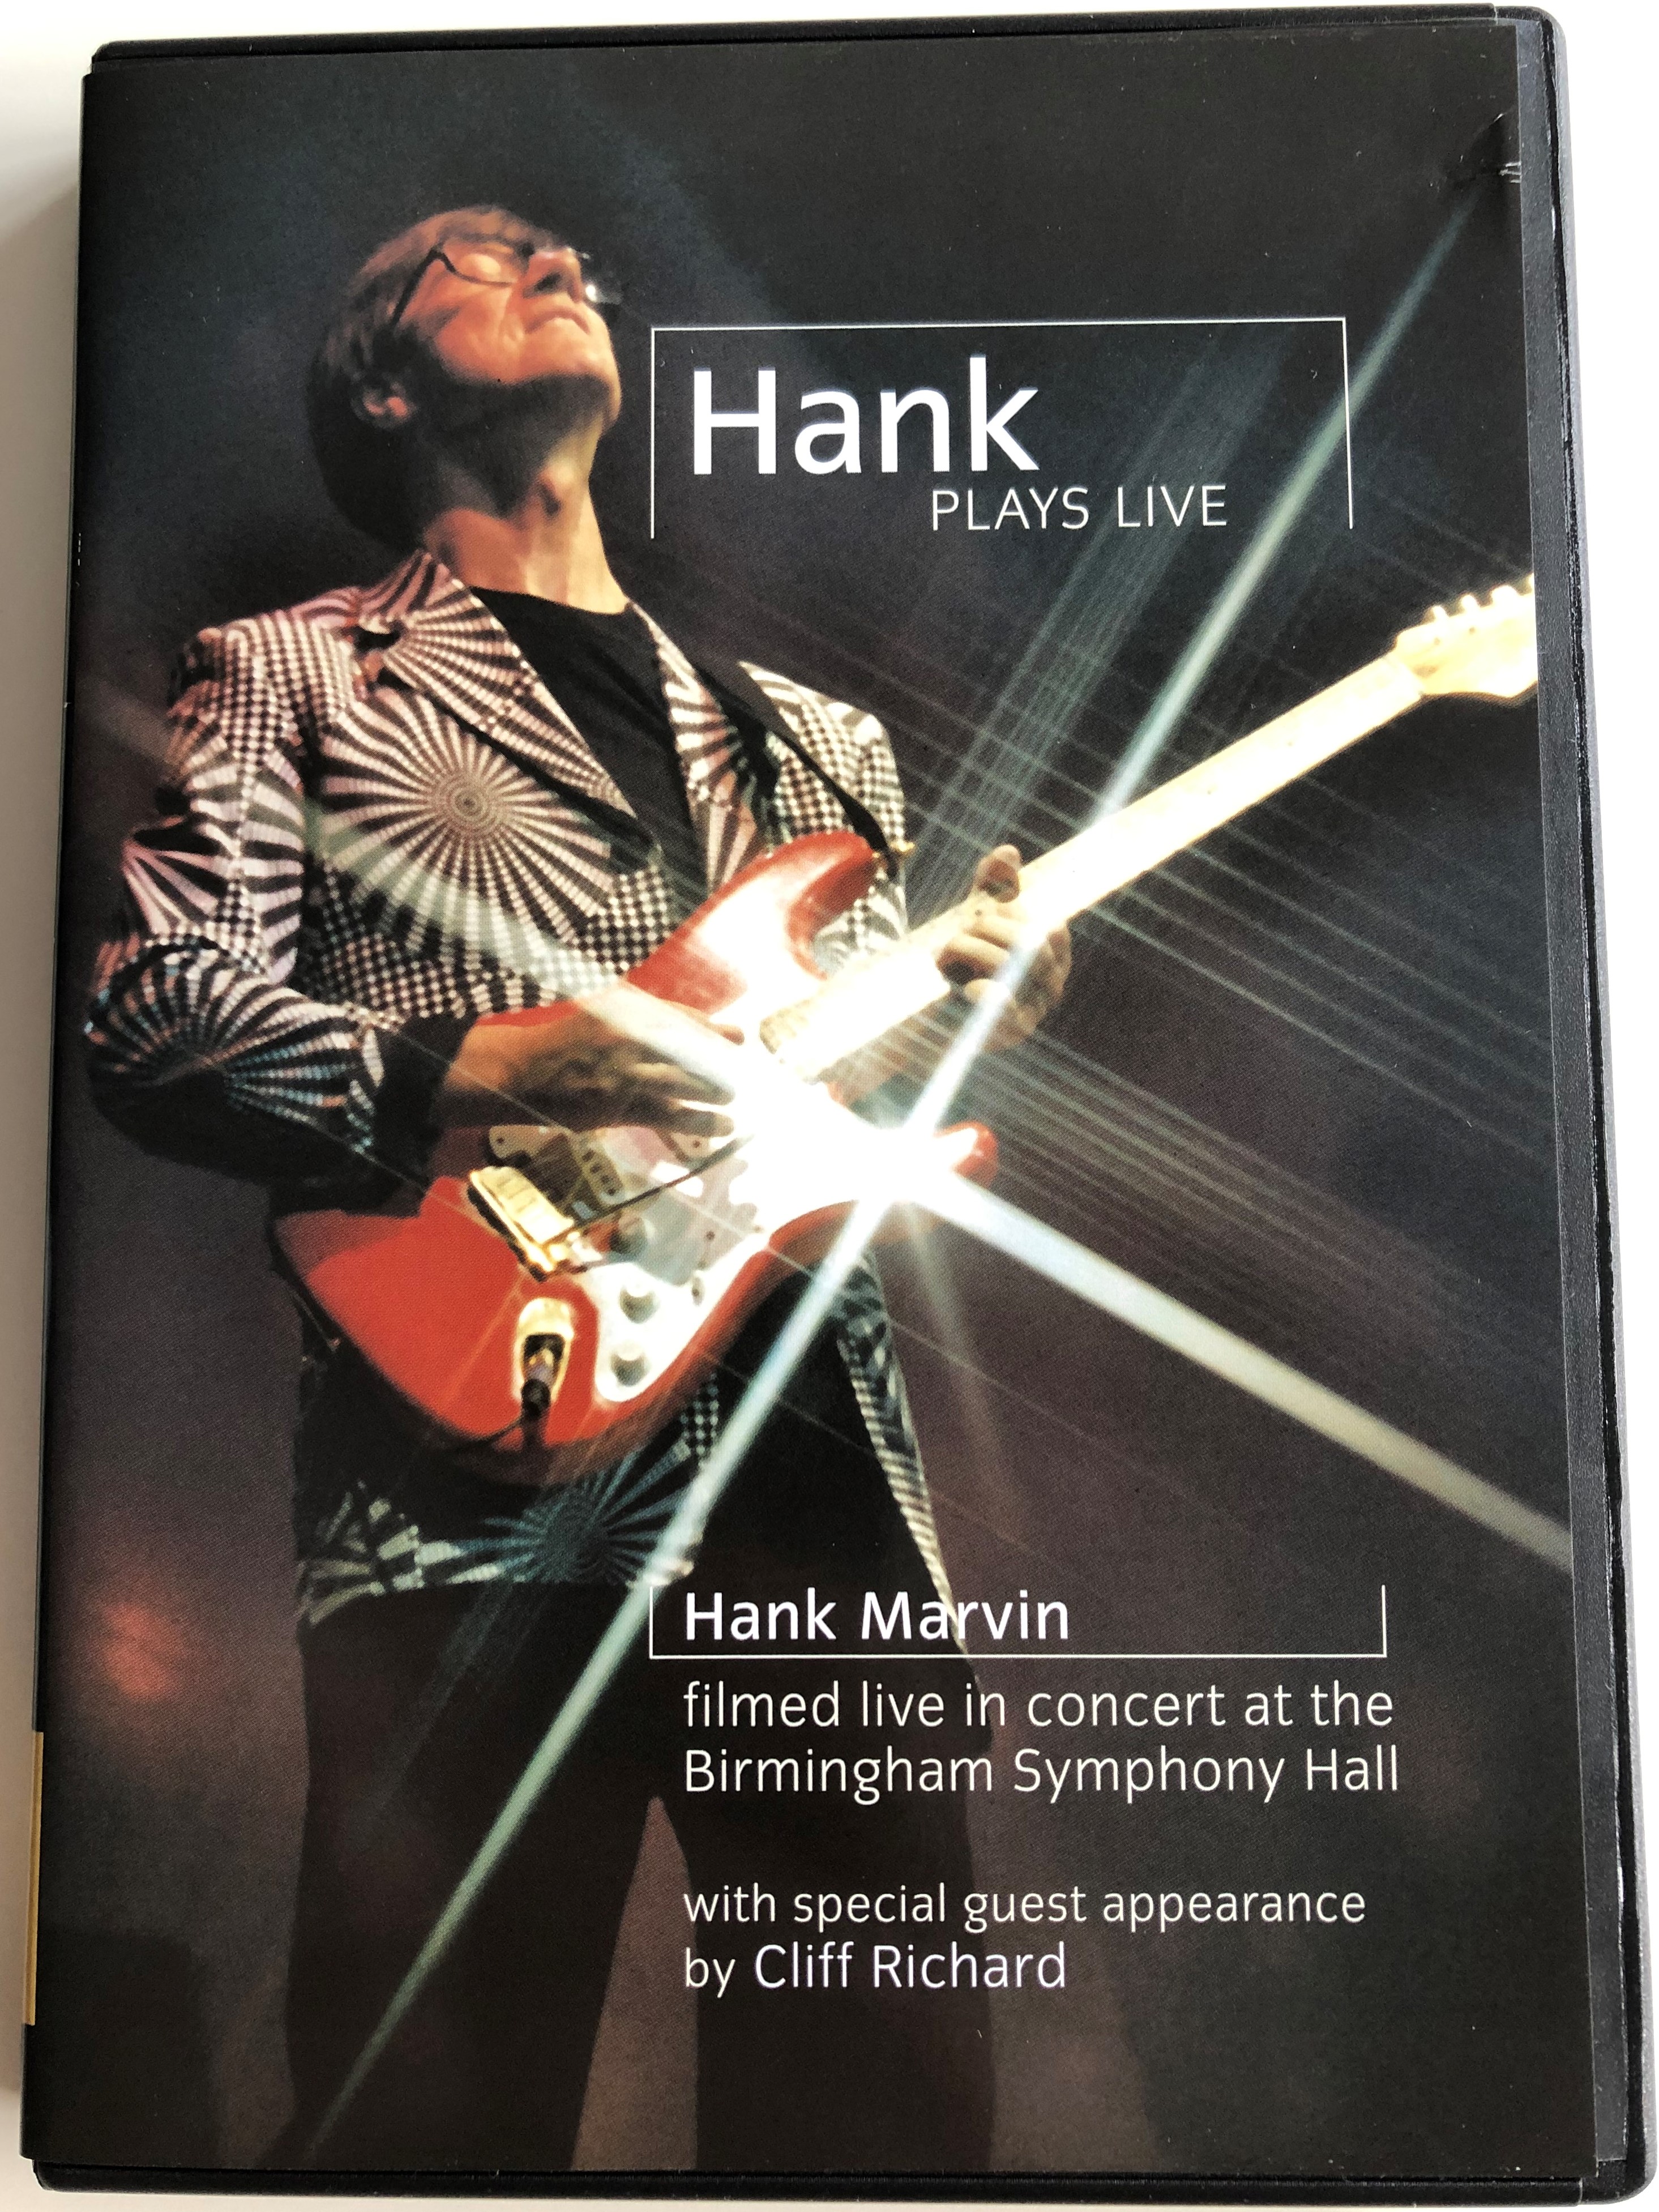 hank-plays-live-dvd-2004-hank-marvin-filmed-live-in-concert-at-the-birmingham-symphony-hall-1.jpg